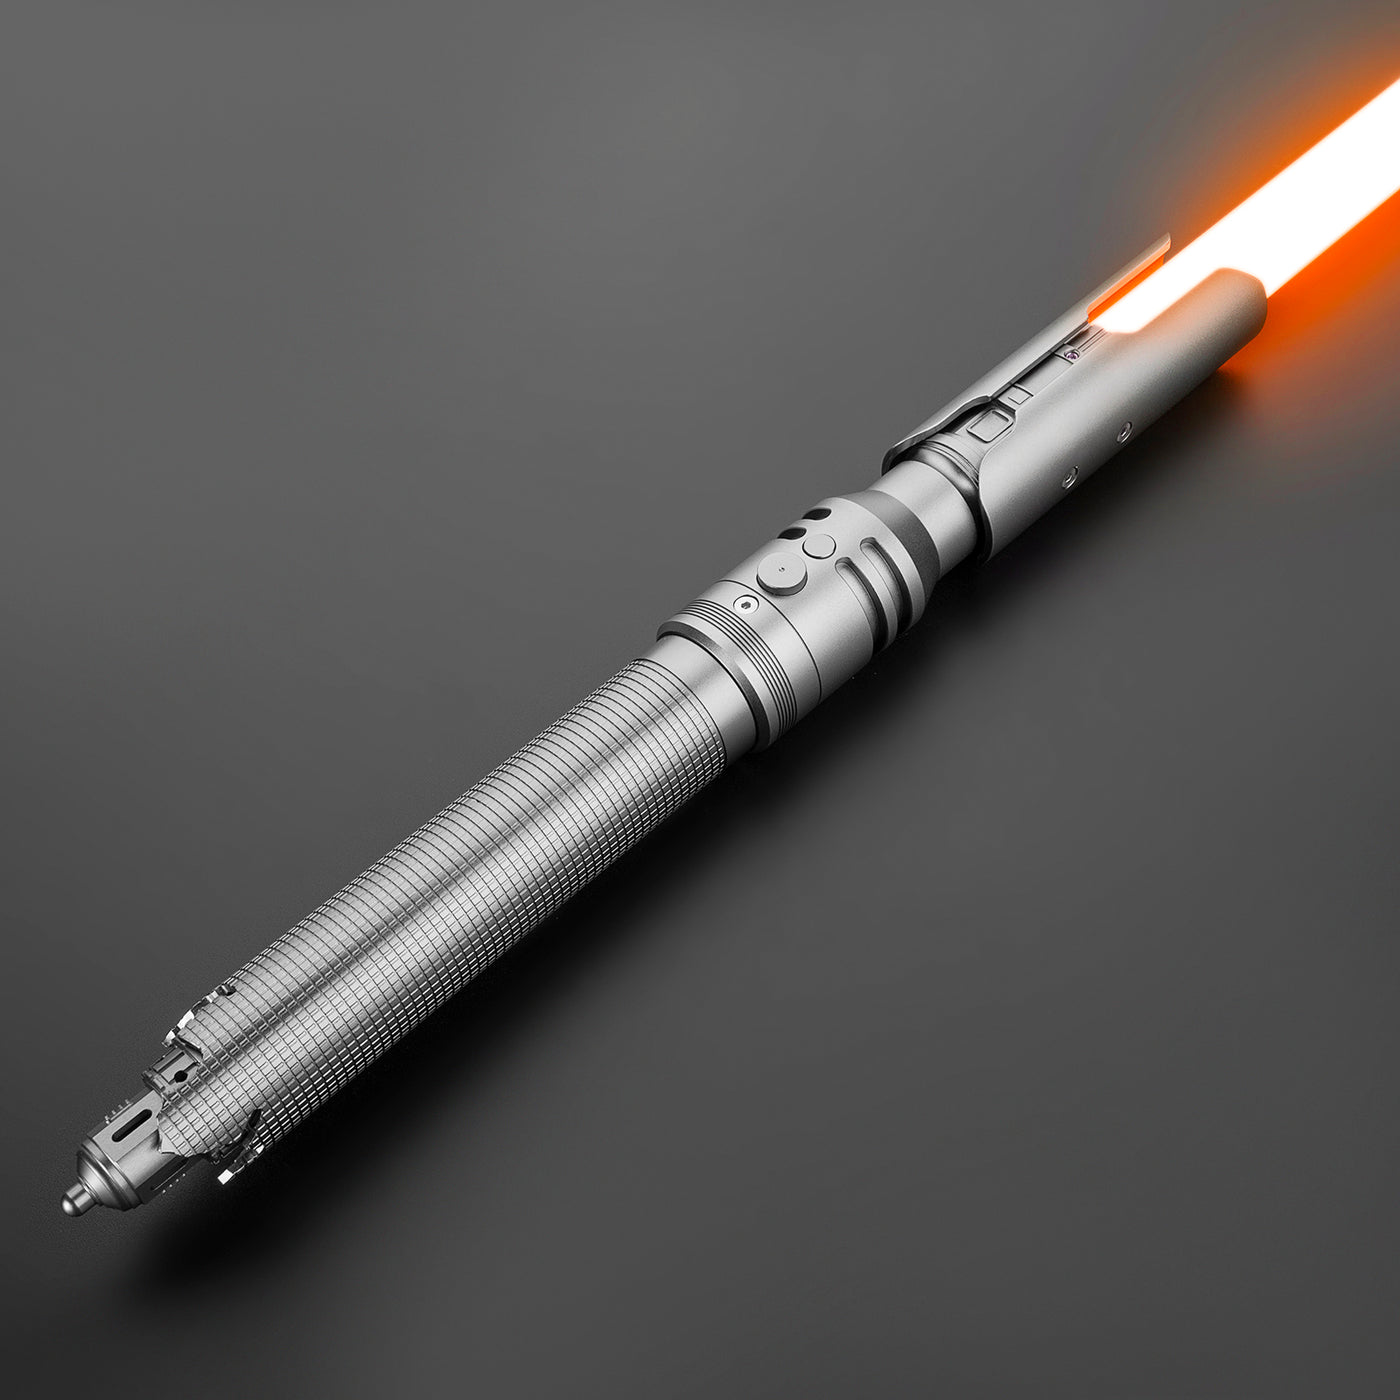 The Phoenix - KenJo Sabers - Premium Baselit / Mat Zilver - Star Wars Lightsaber replica Jedi Sith - Best sabershop Europe - Nederland light sabers kopen -